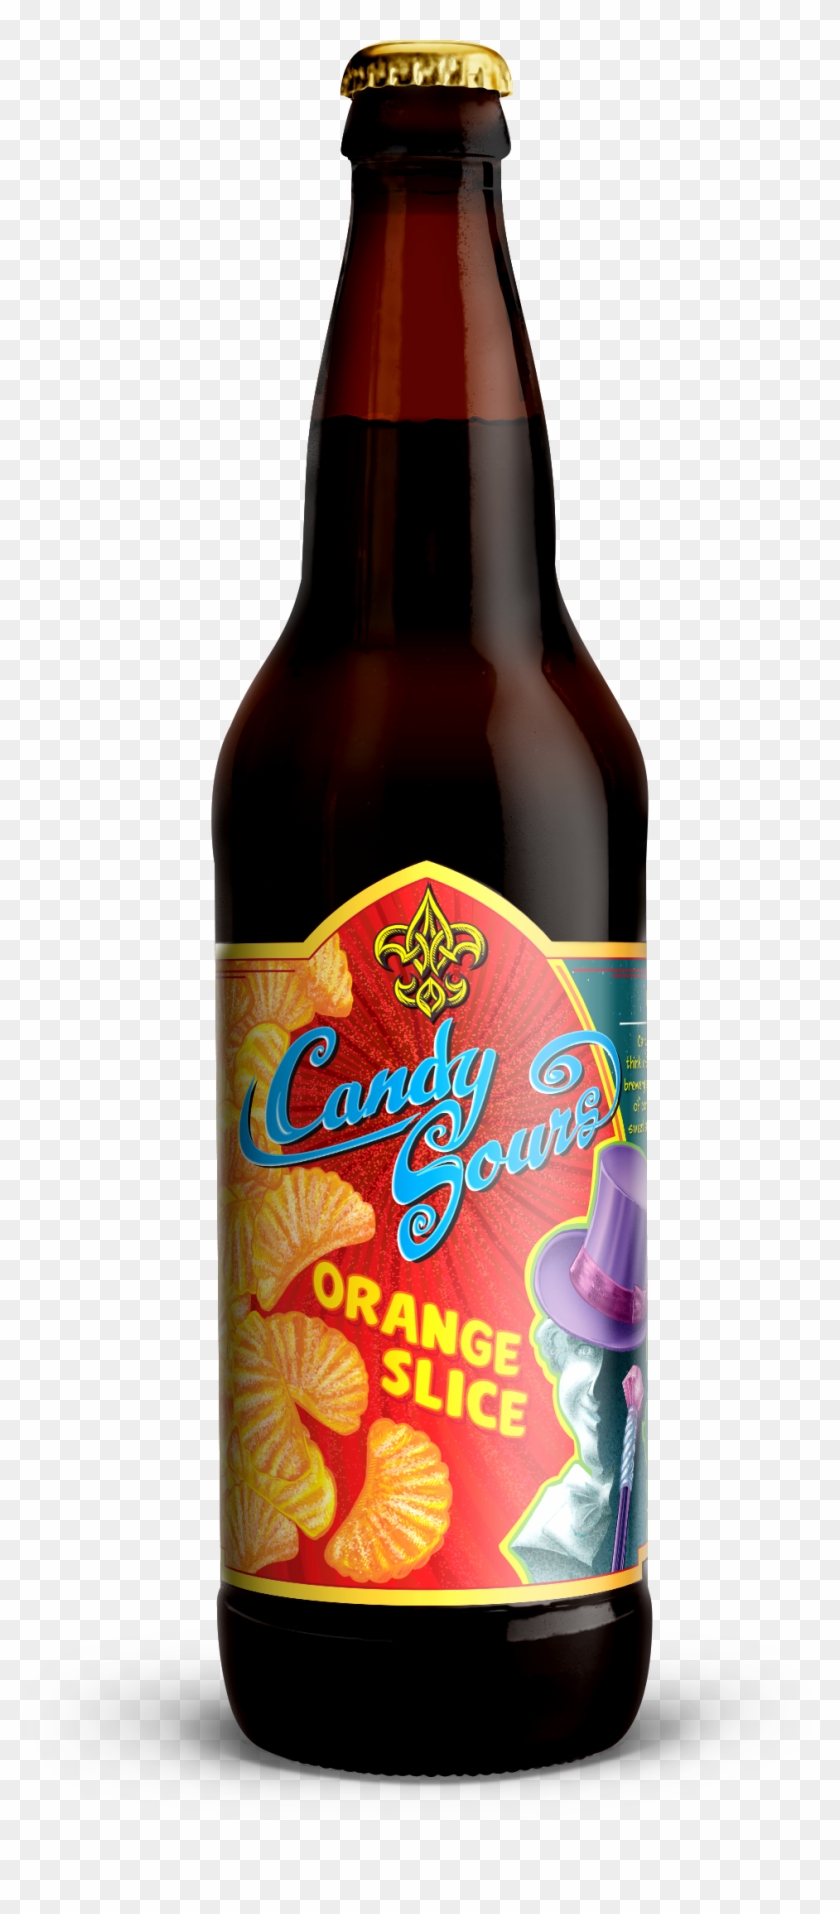 Orange Slice Bottle - Beer Bottle Clipart #679347